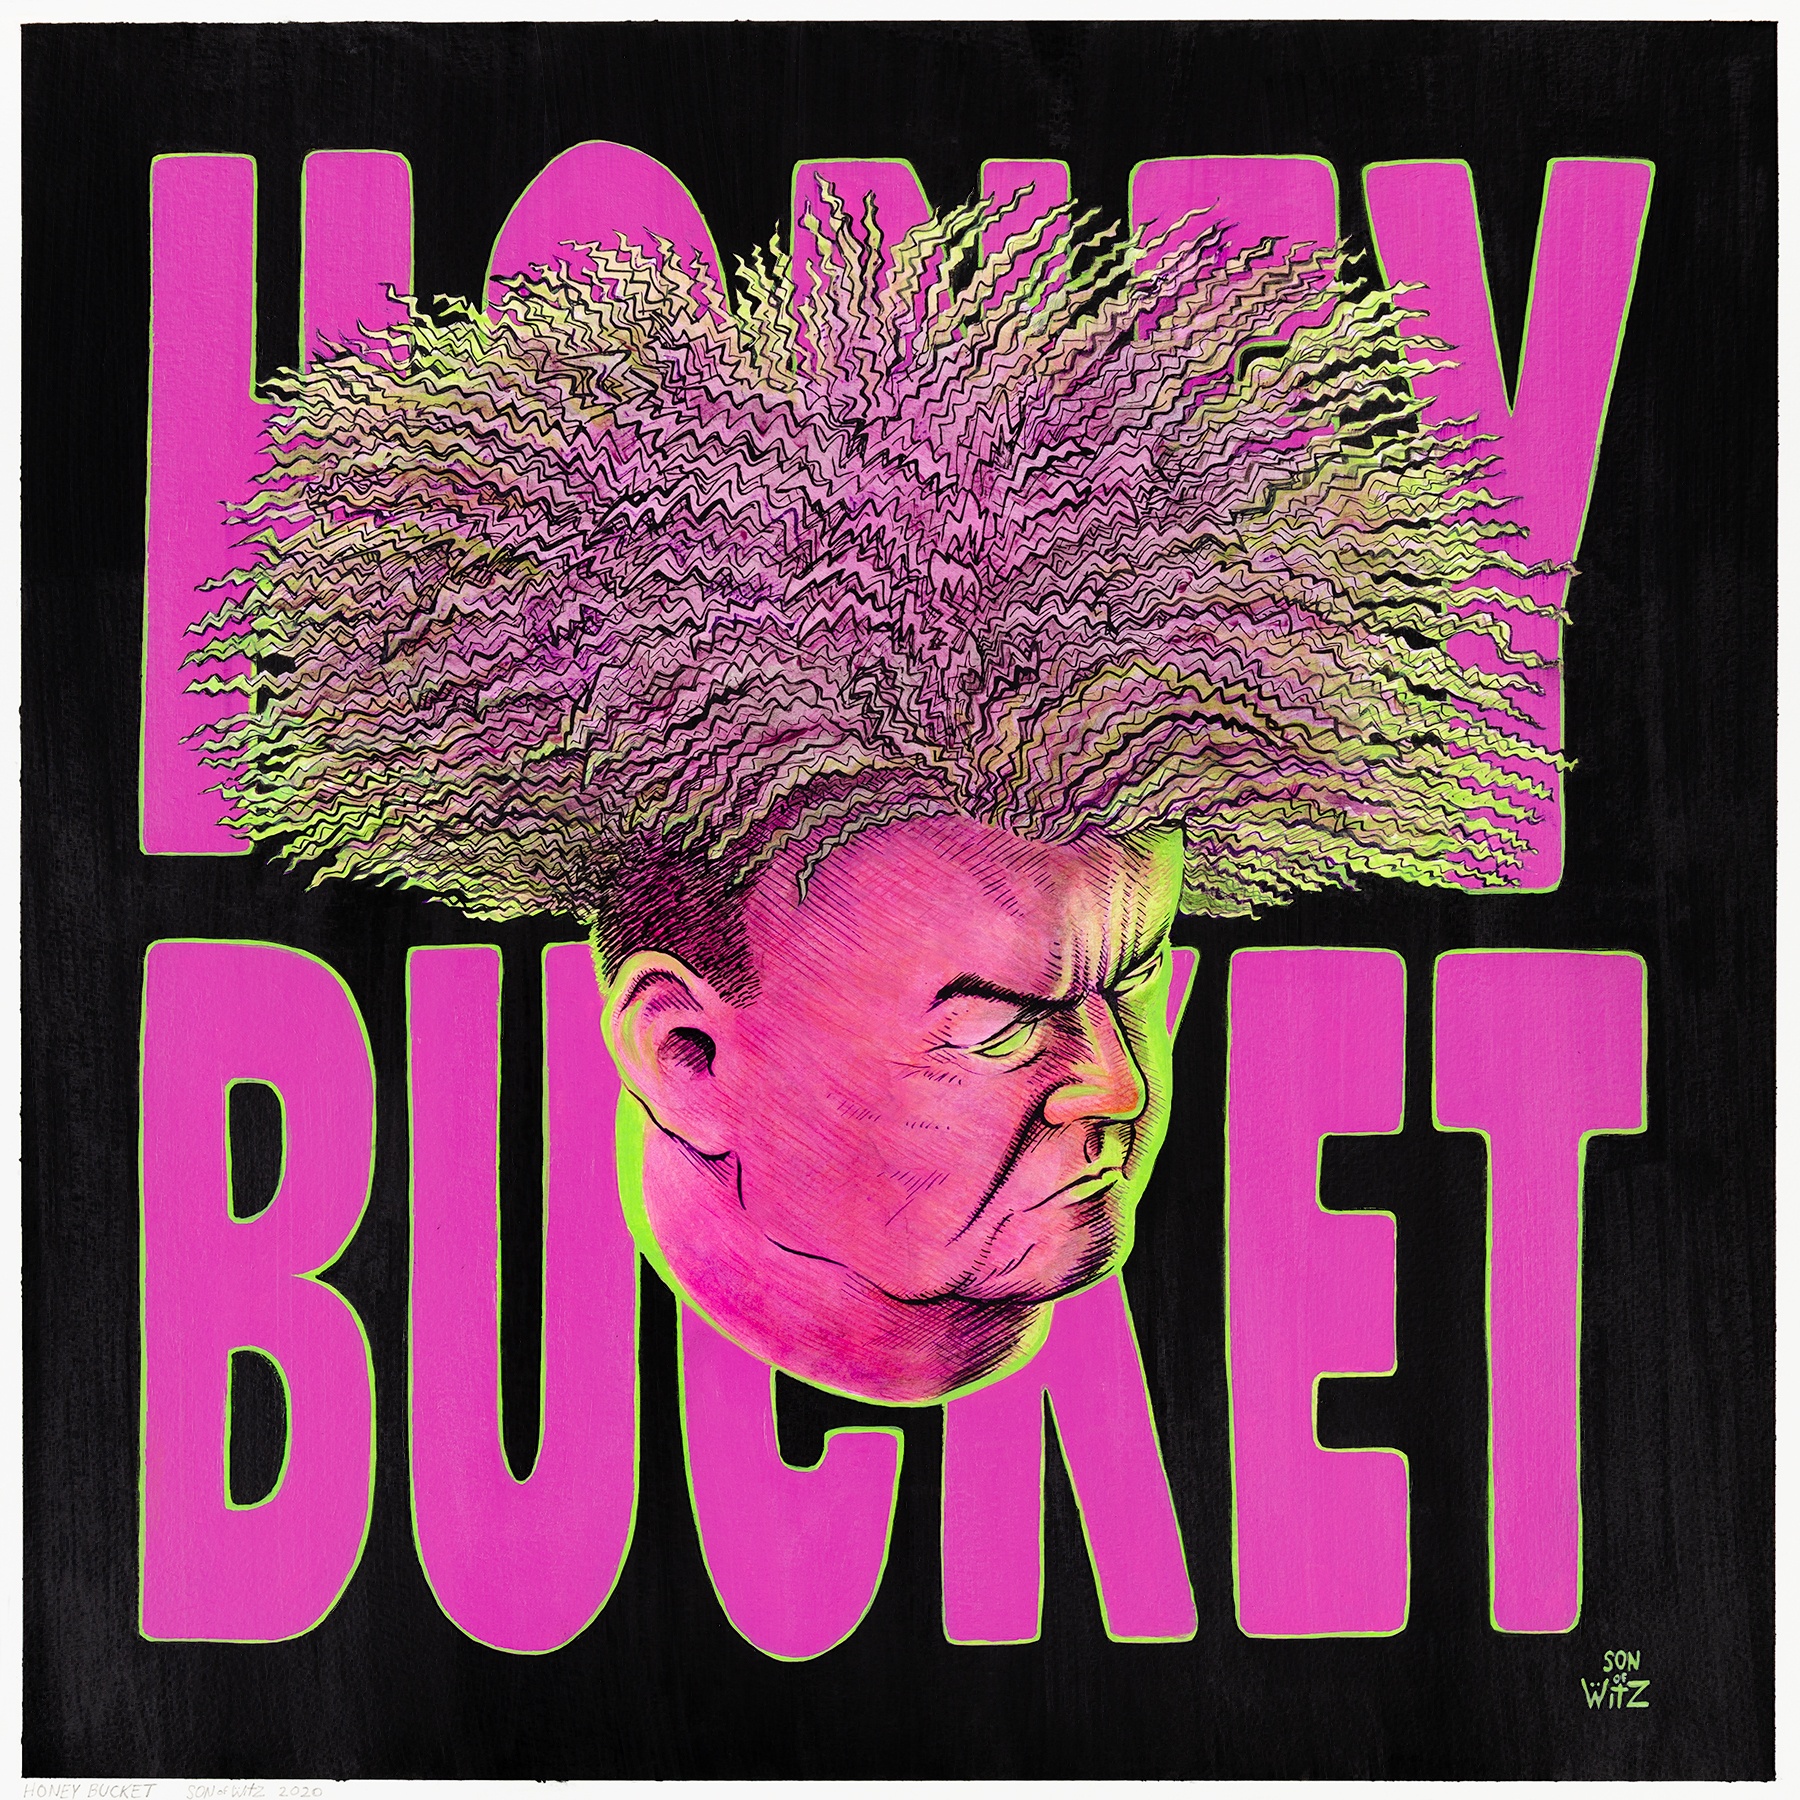 “Honey Bucket” Portrait Painting of King Buzzo